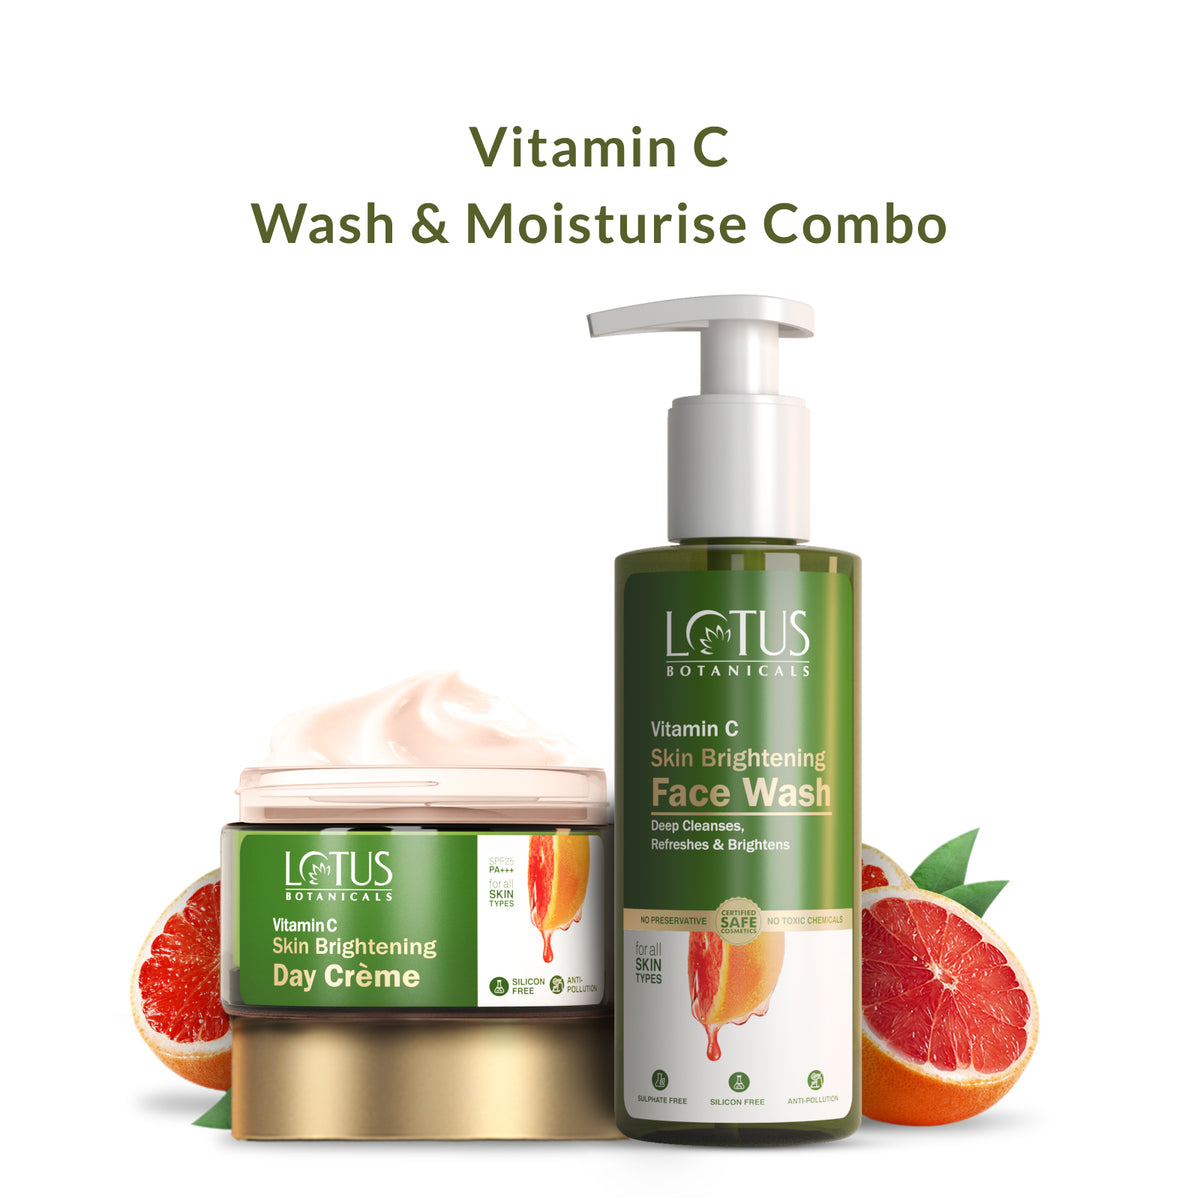 Vitamin C Face Wash and Moisturizer Combo - Refreshing Skincare with Antioxidant Benefits